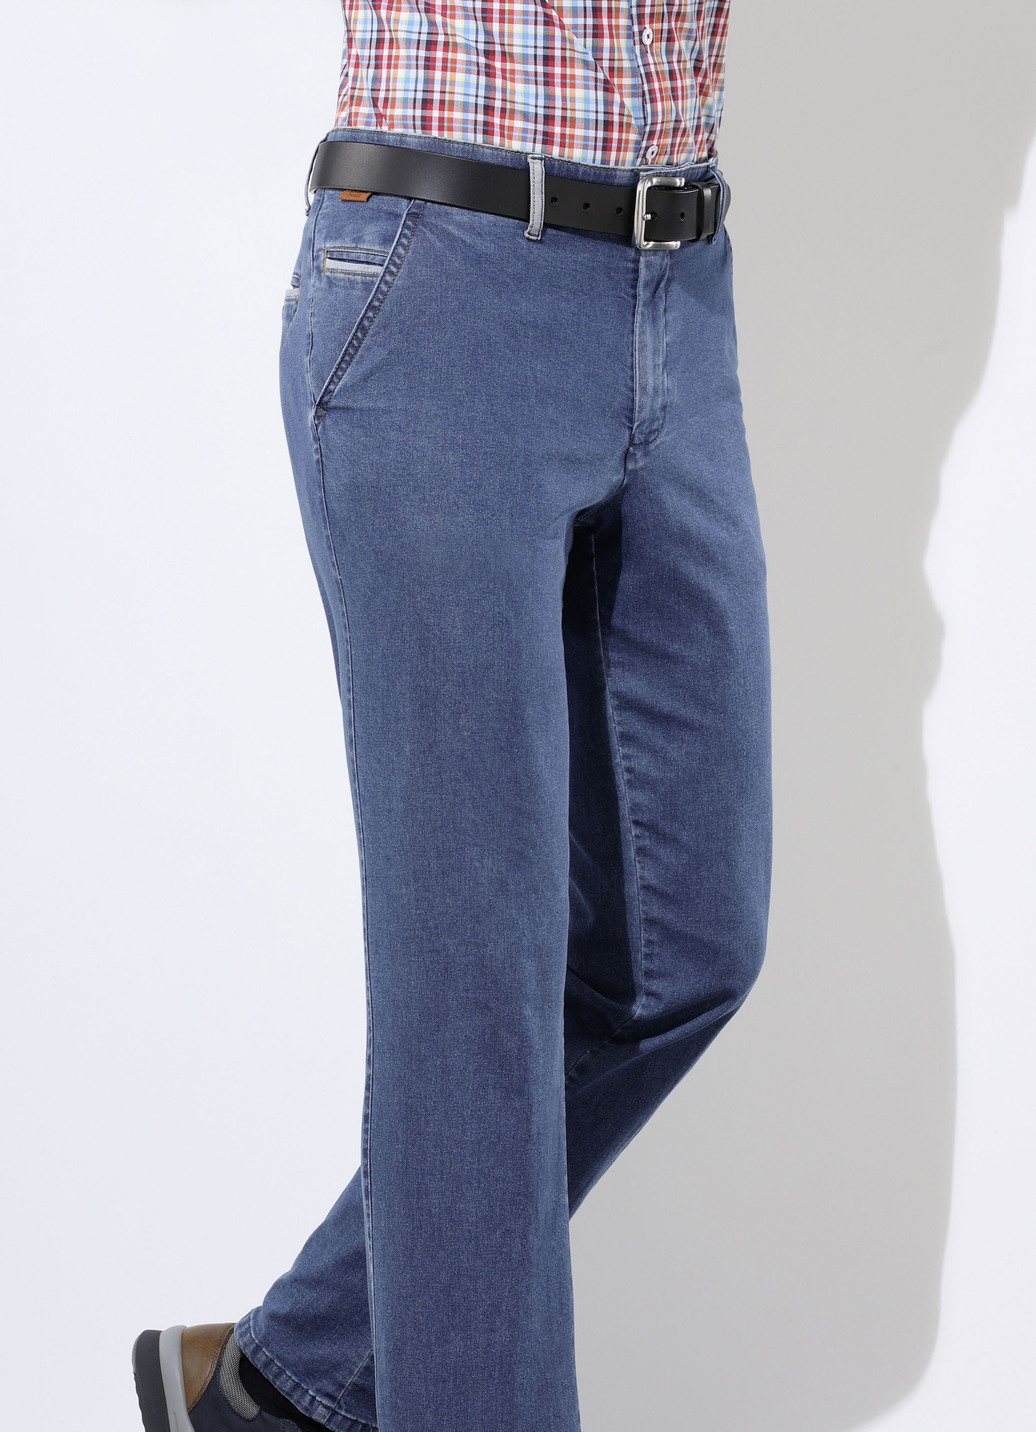 "Francesco Botti"-Jeans in 3 Farben, Jeansblau, Größe 60 von FRANCESCO BOTTI